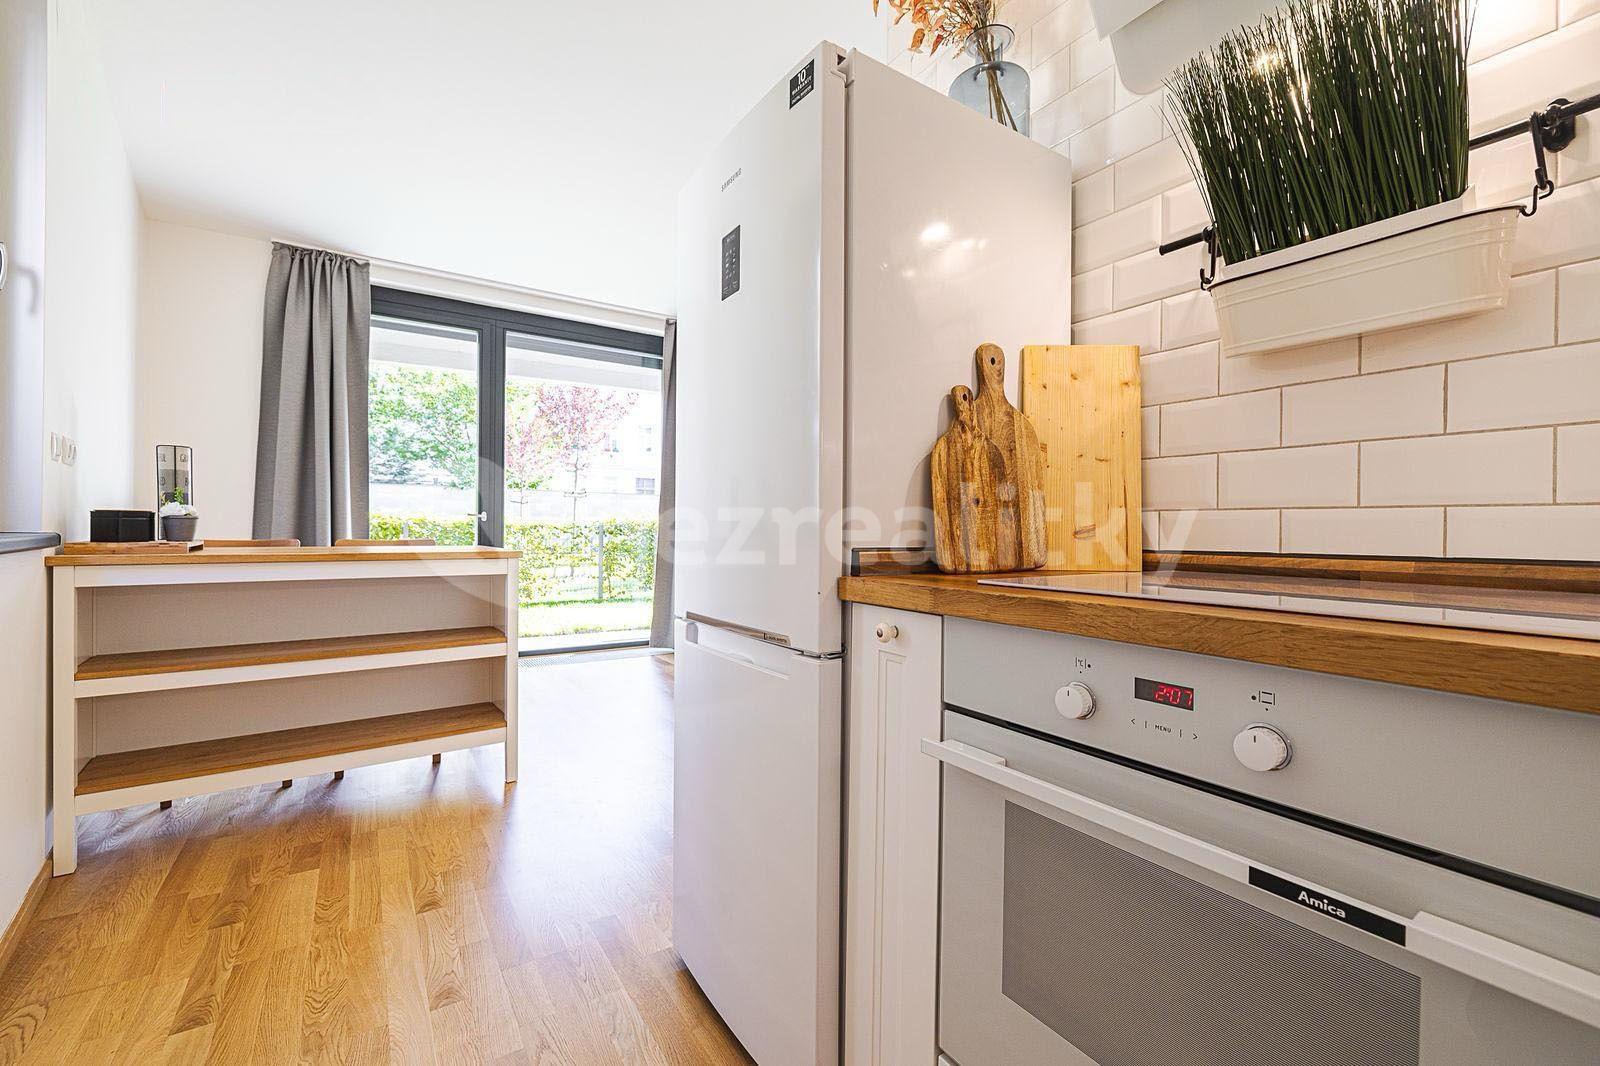 2 bedroom with open-plan kitchen flat for sale, 86 m², Dělnická, Prague, Prague